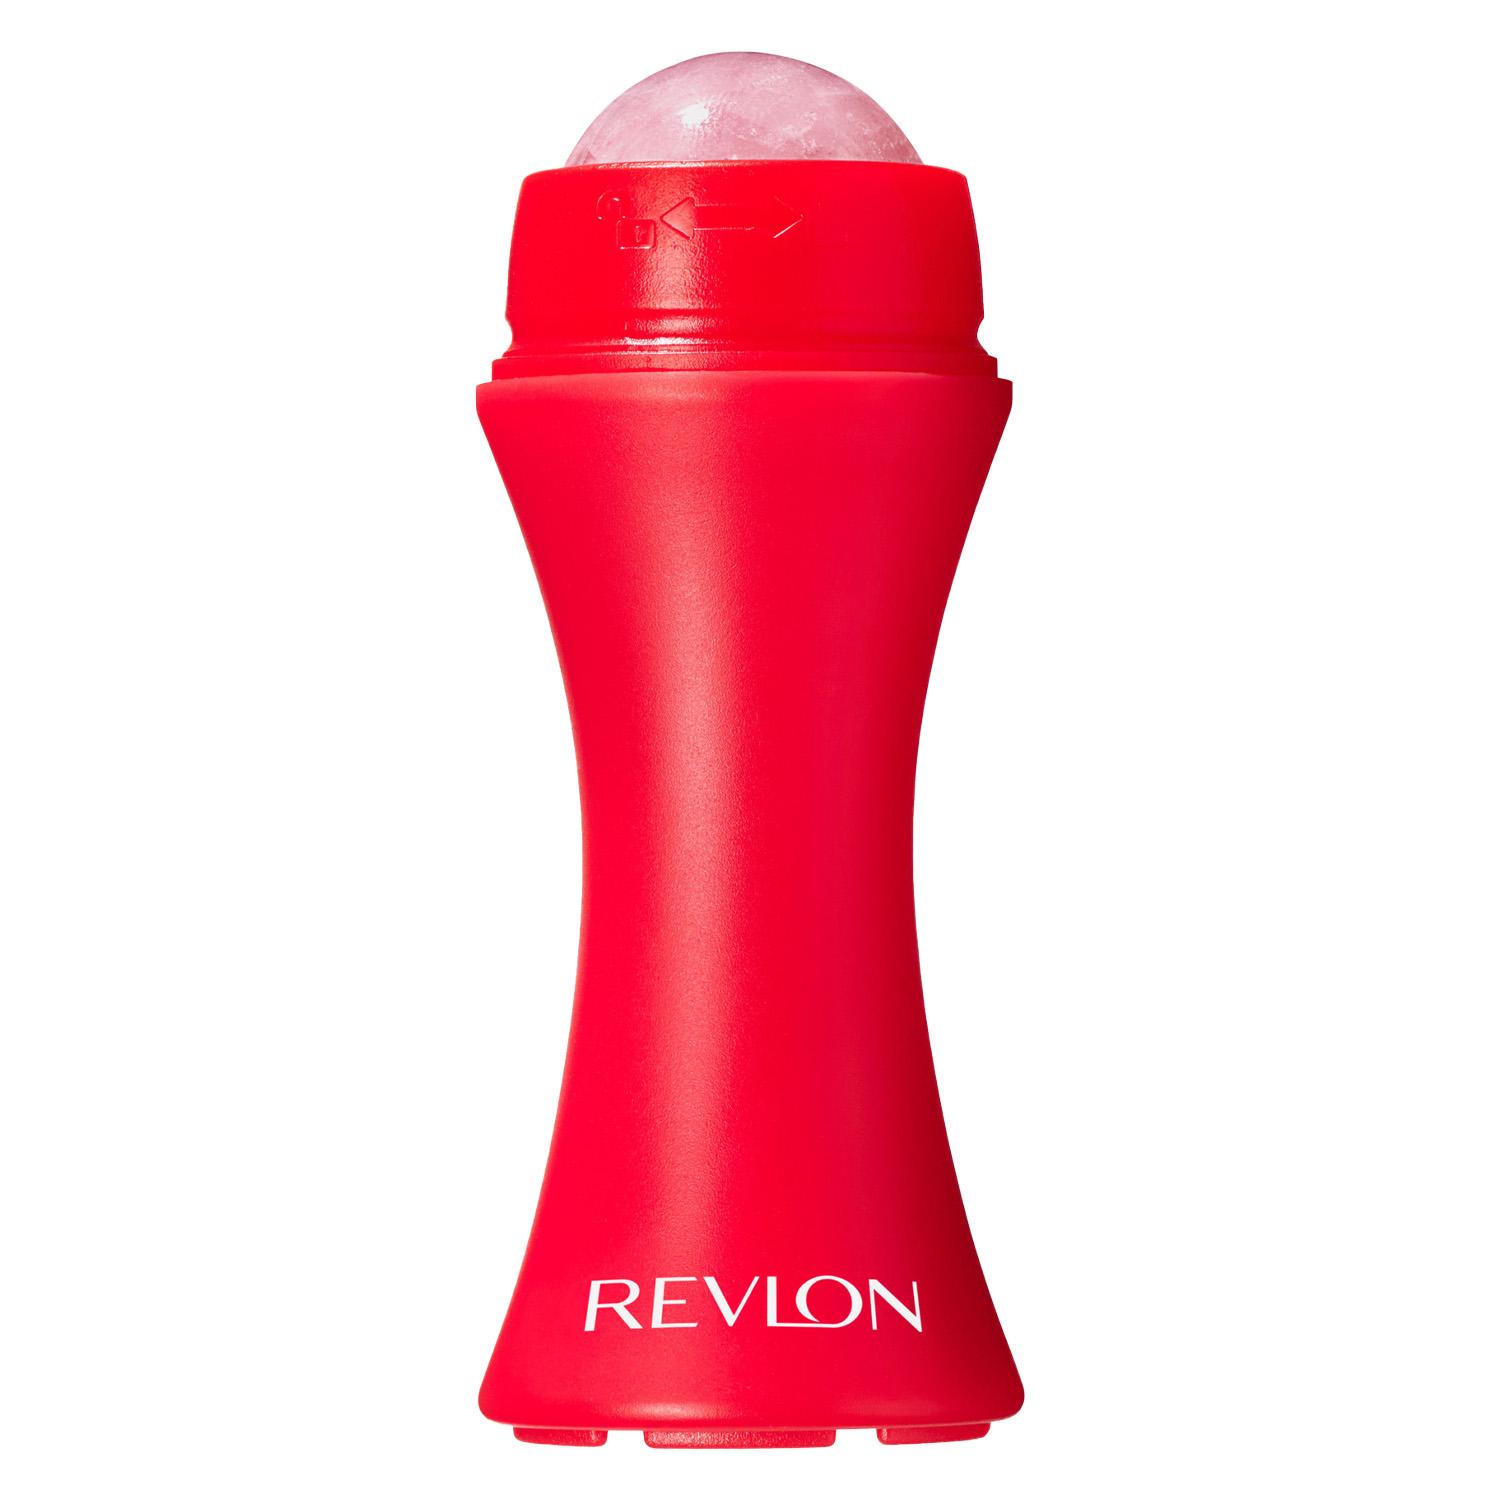 Revlon Tools - Skin Reviving Roller